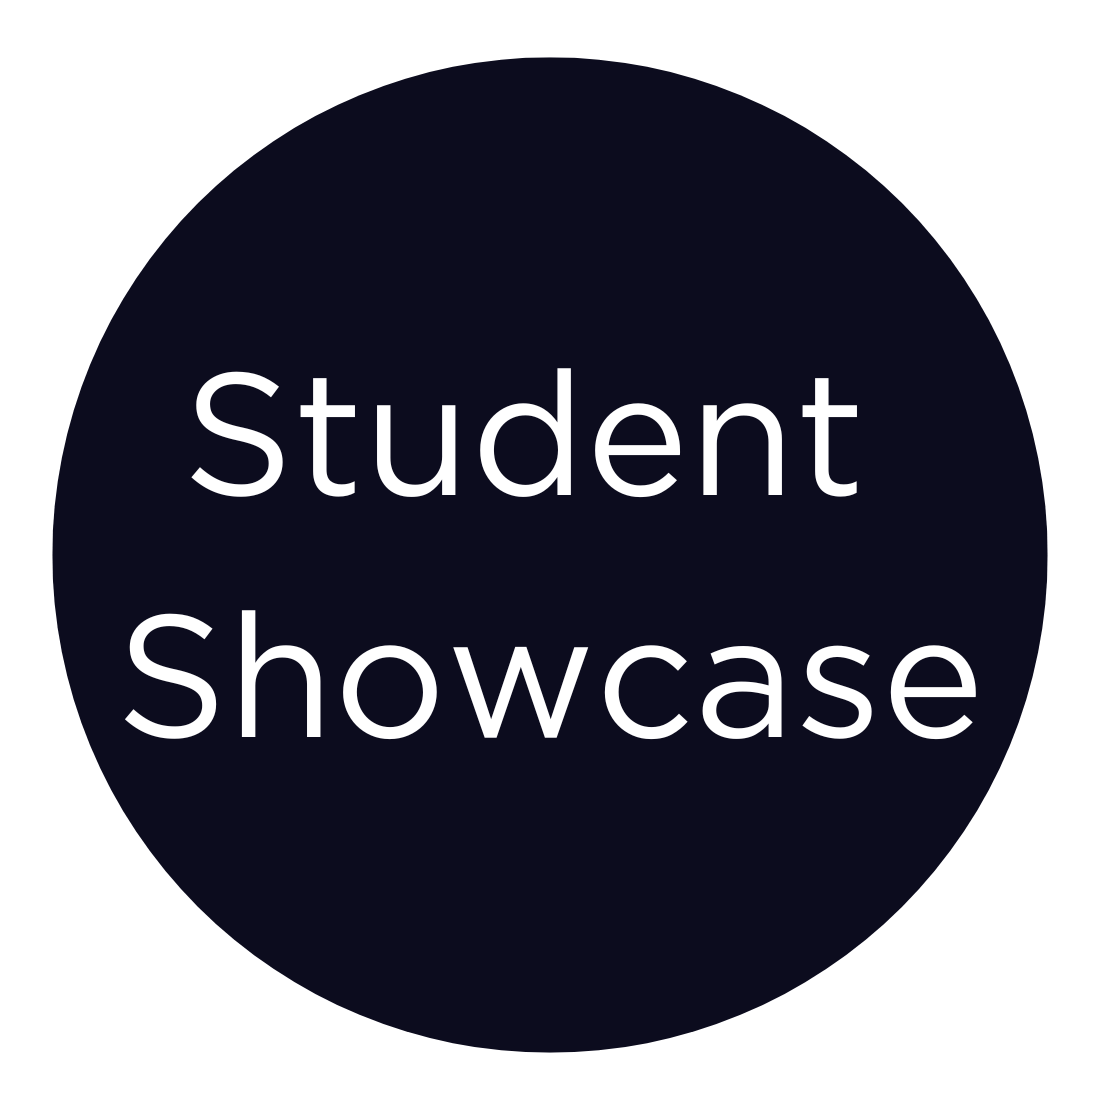 Student Showcase